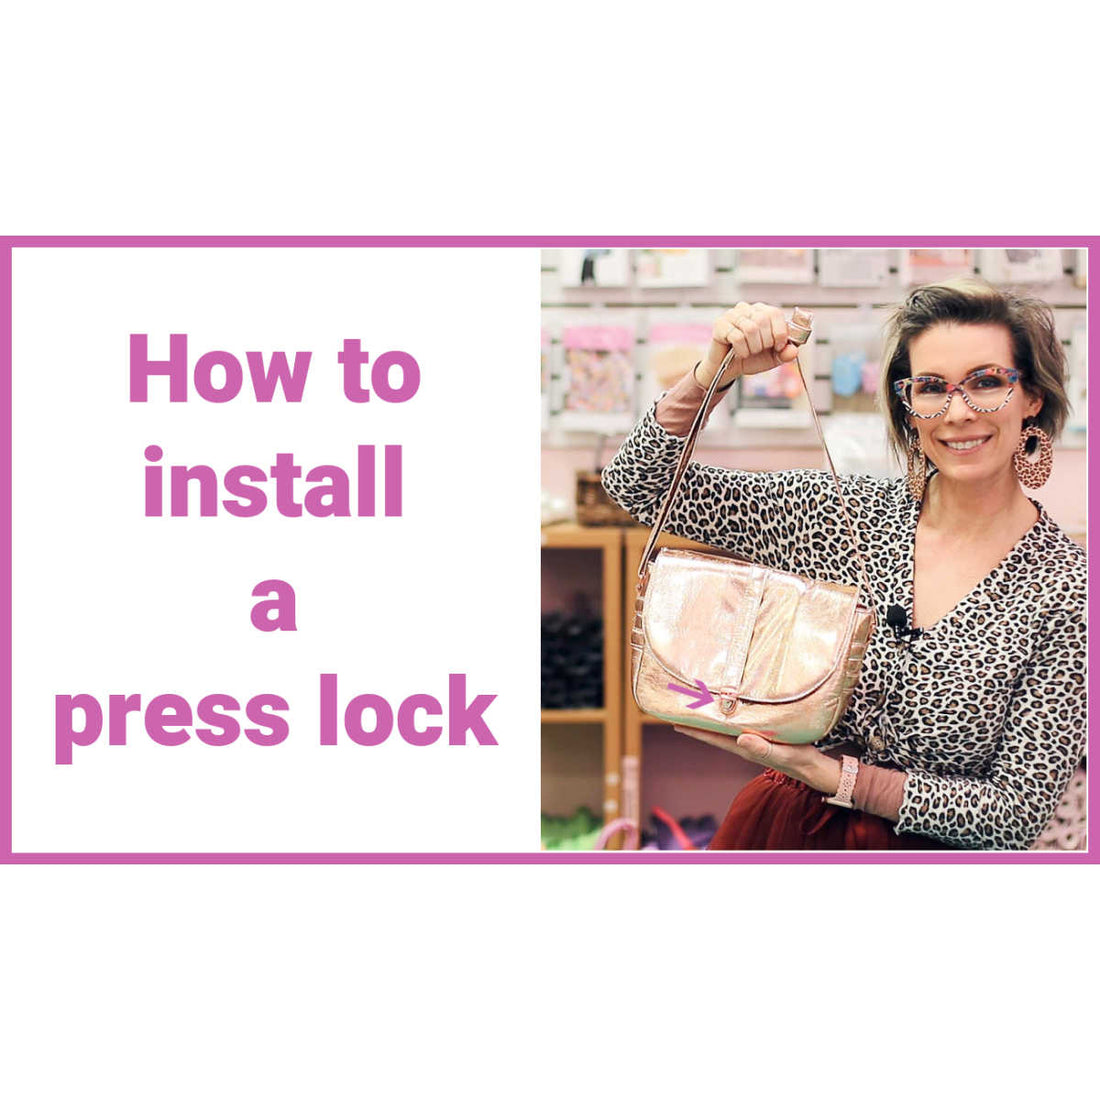 Applying a press lock